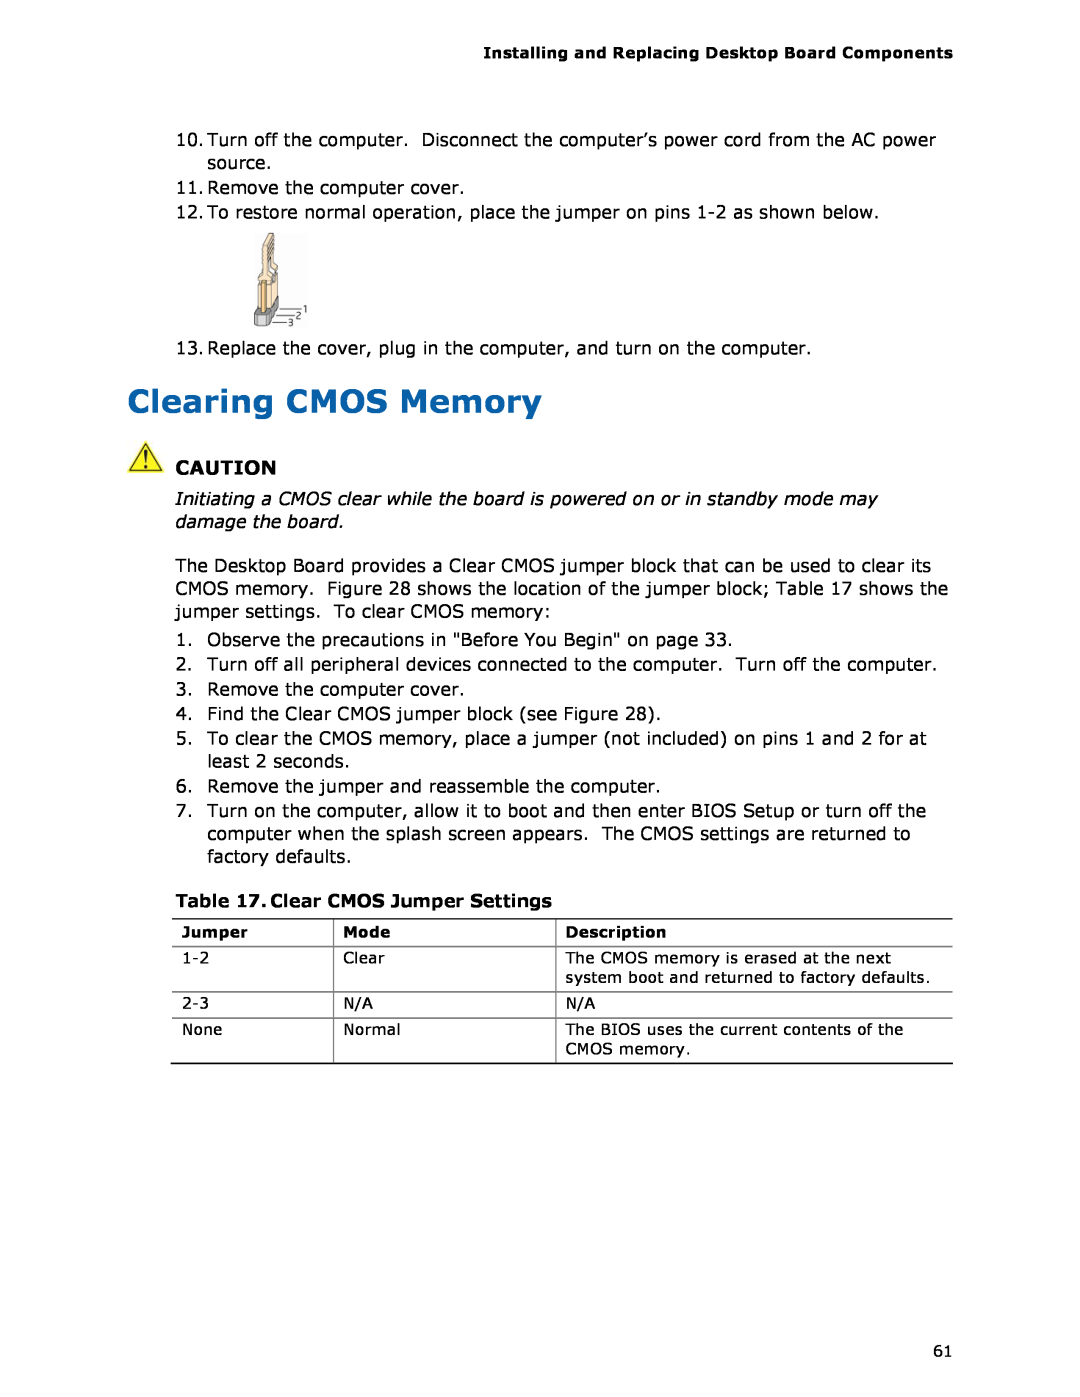 Intel DQ57TM manual Clearing CMOS Memory, Clear CMOS Jumper Settings 